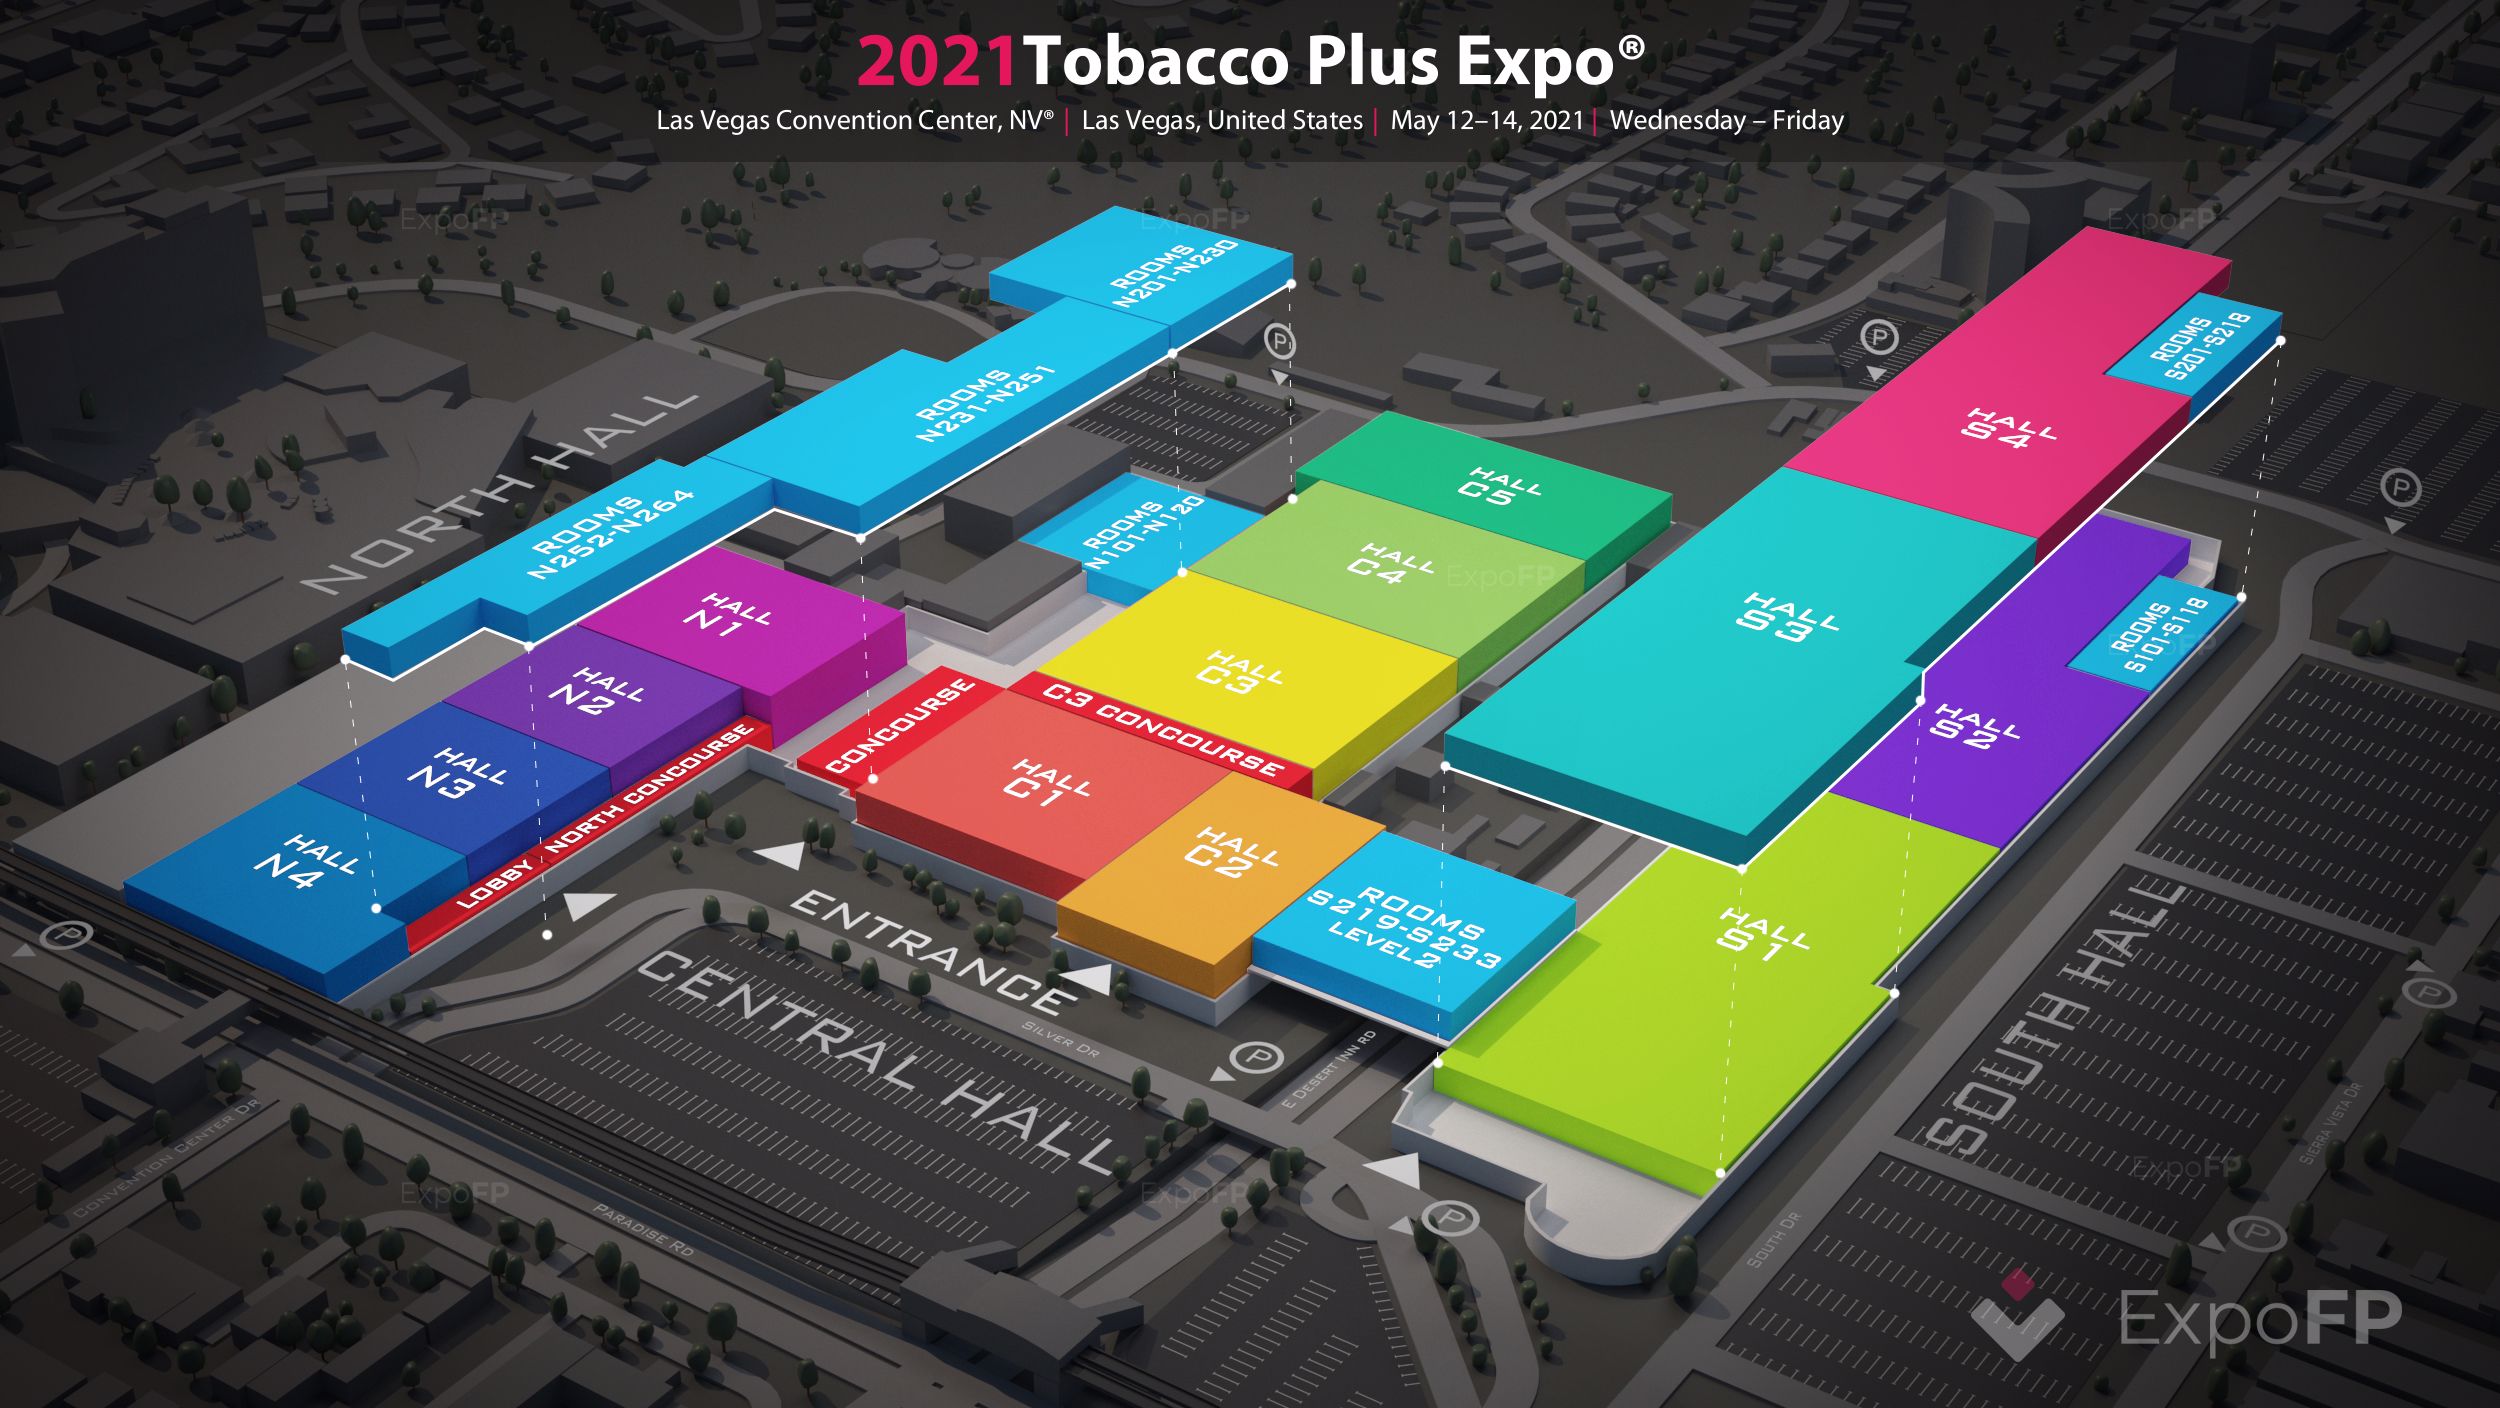 Tobacco plus expo 2021 las vegas | tobacco plus expo 2021 3d floorplan | tobacco plus expo 2021